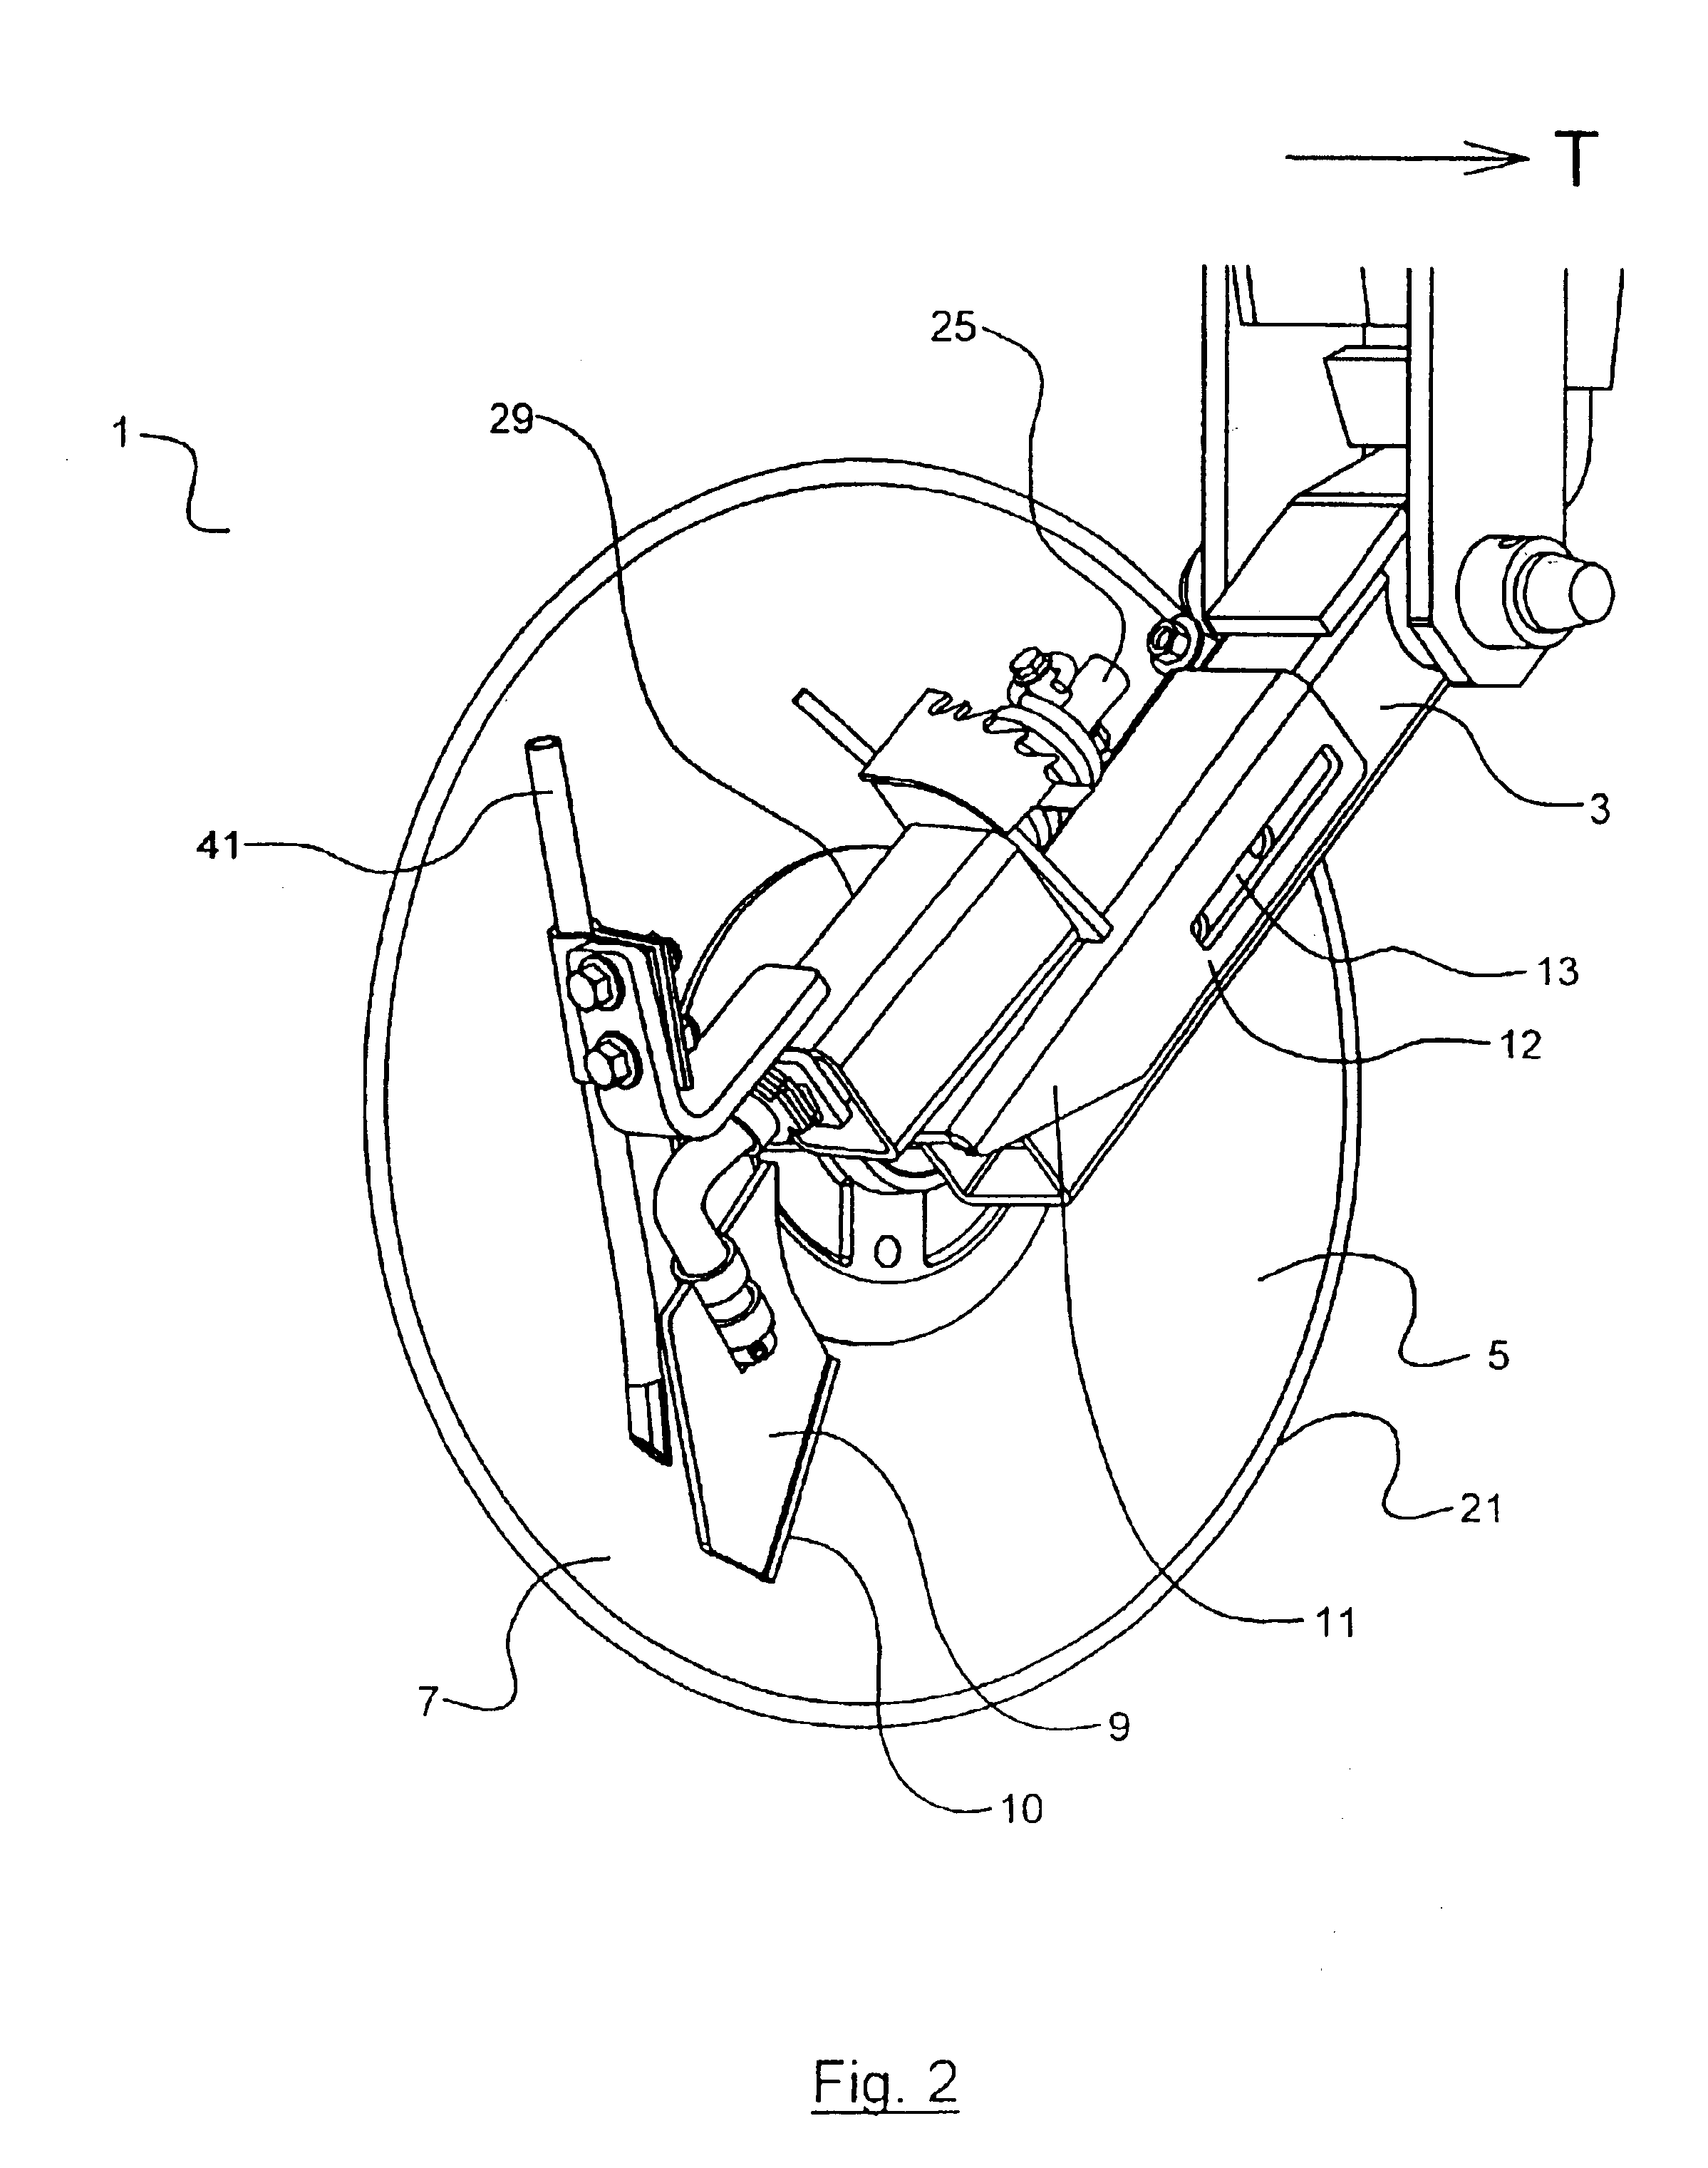 Disc furrow opener scraper positioning system